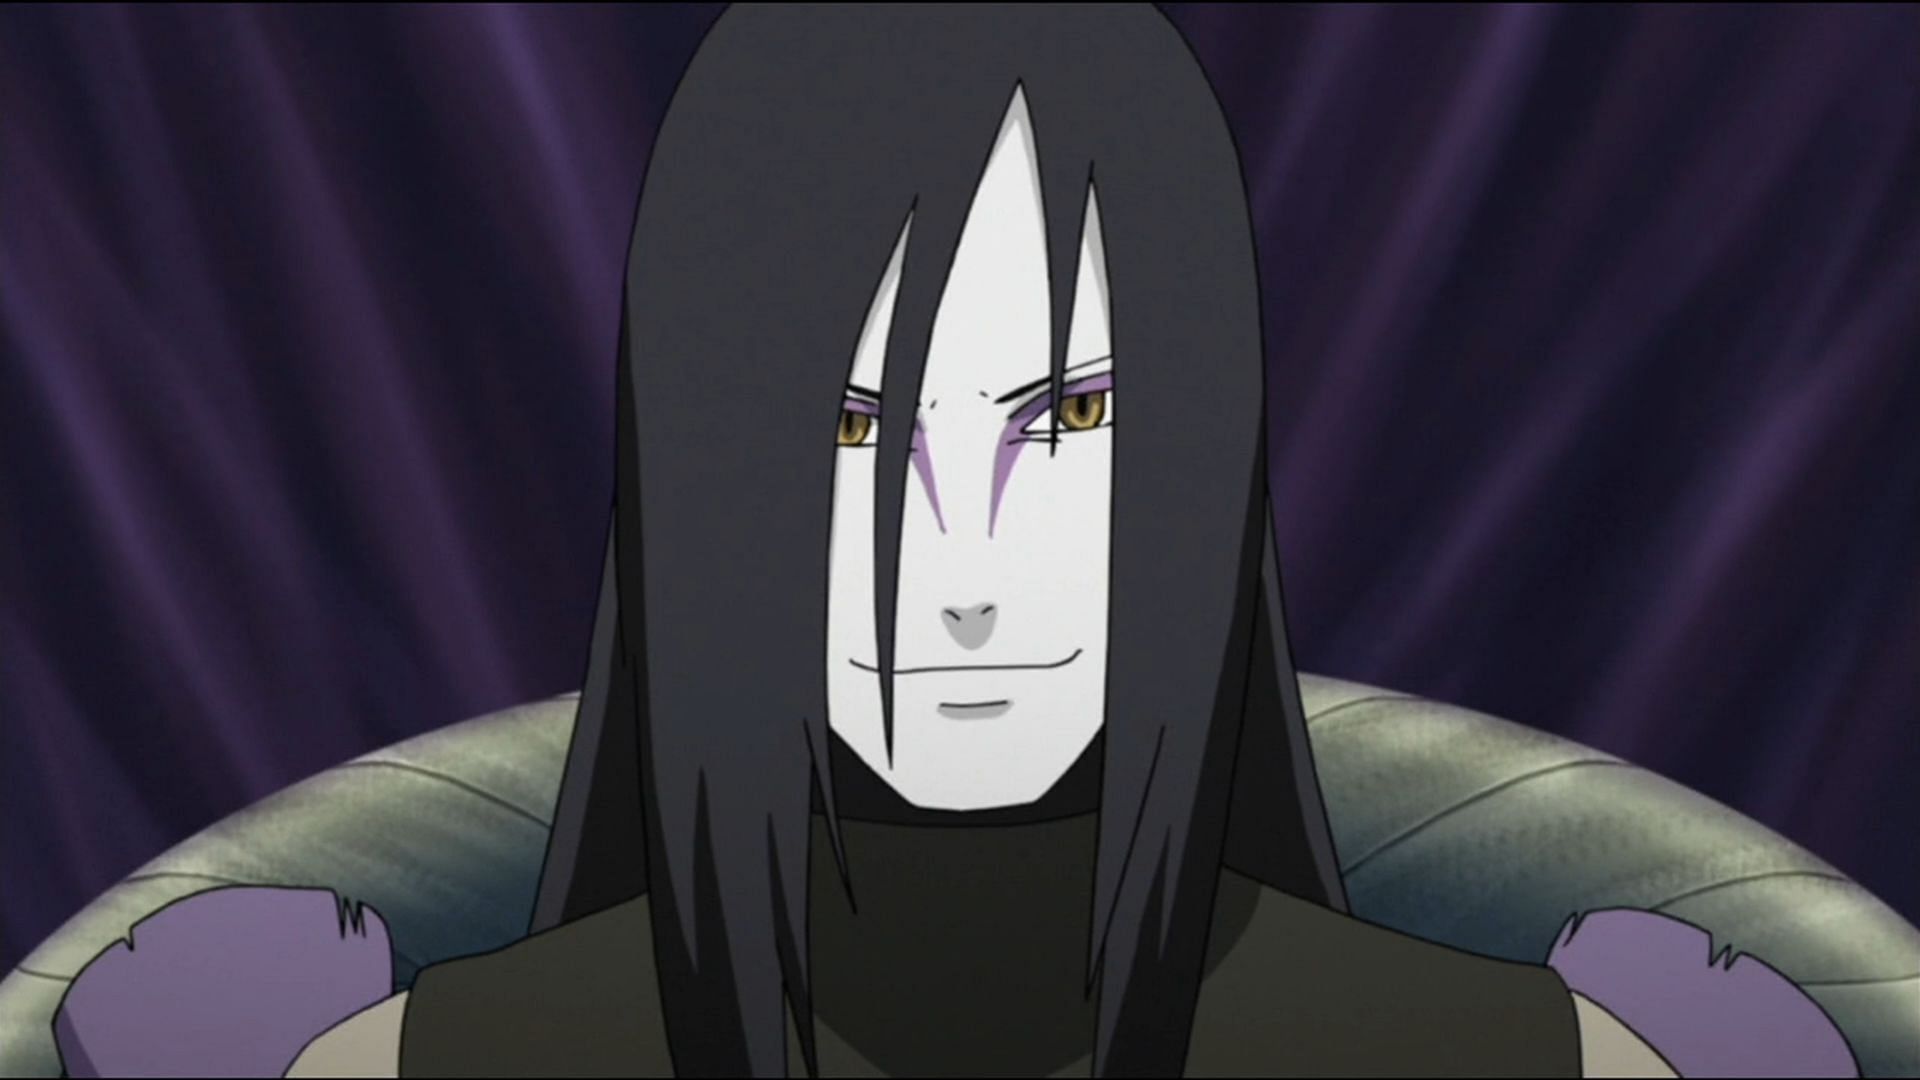 Orochimaru as seen in the Naruto anime (Image via Studio Pierrot)